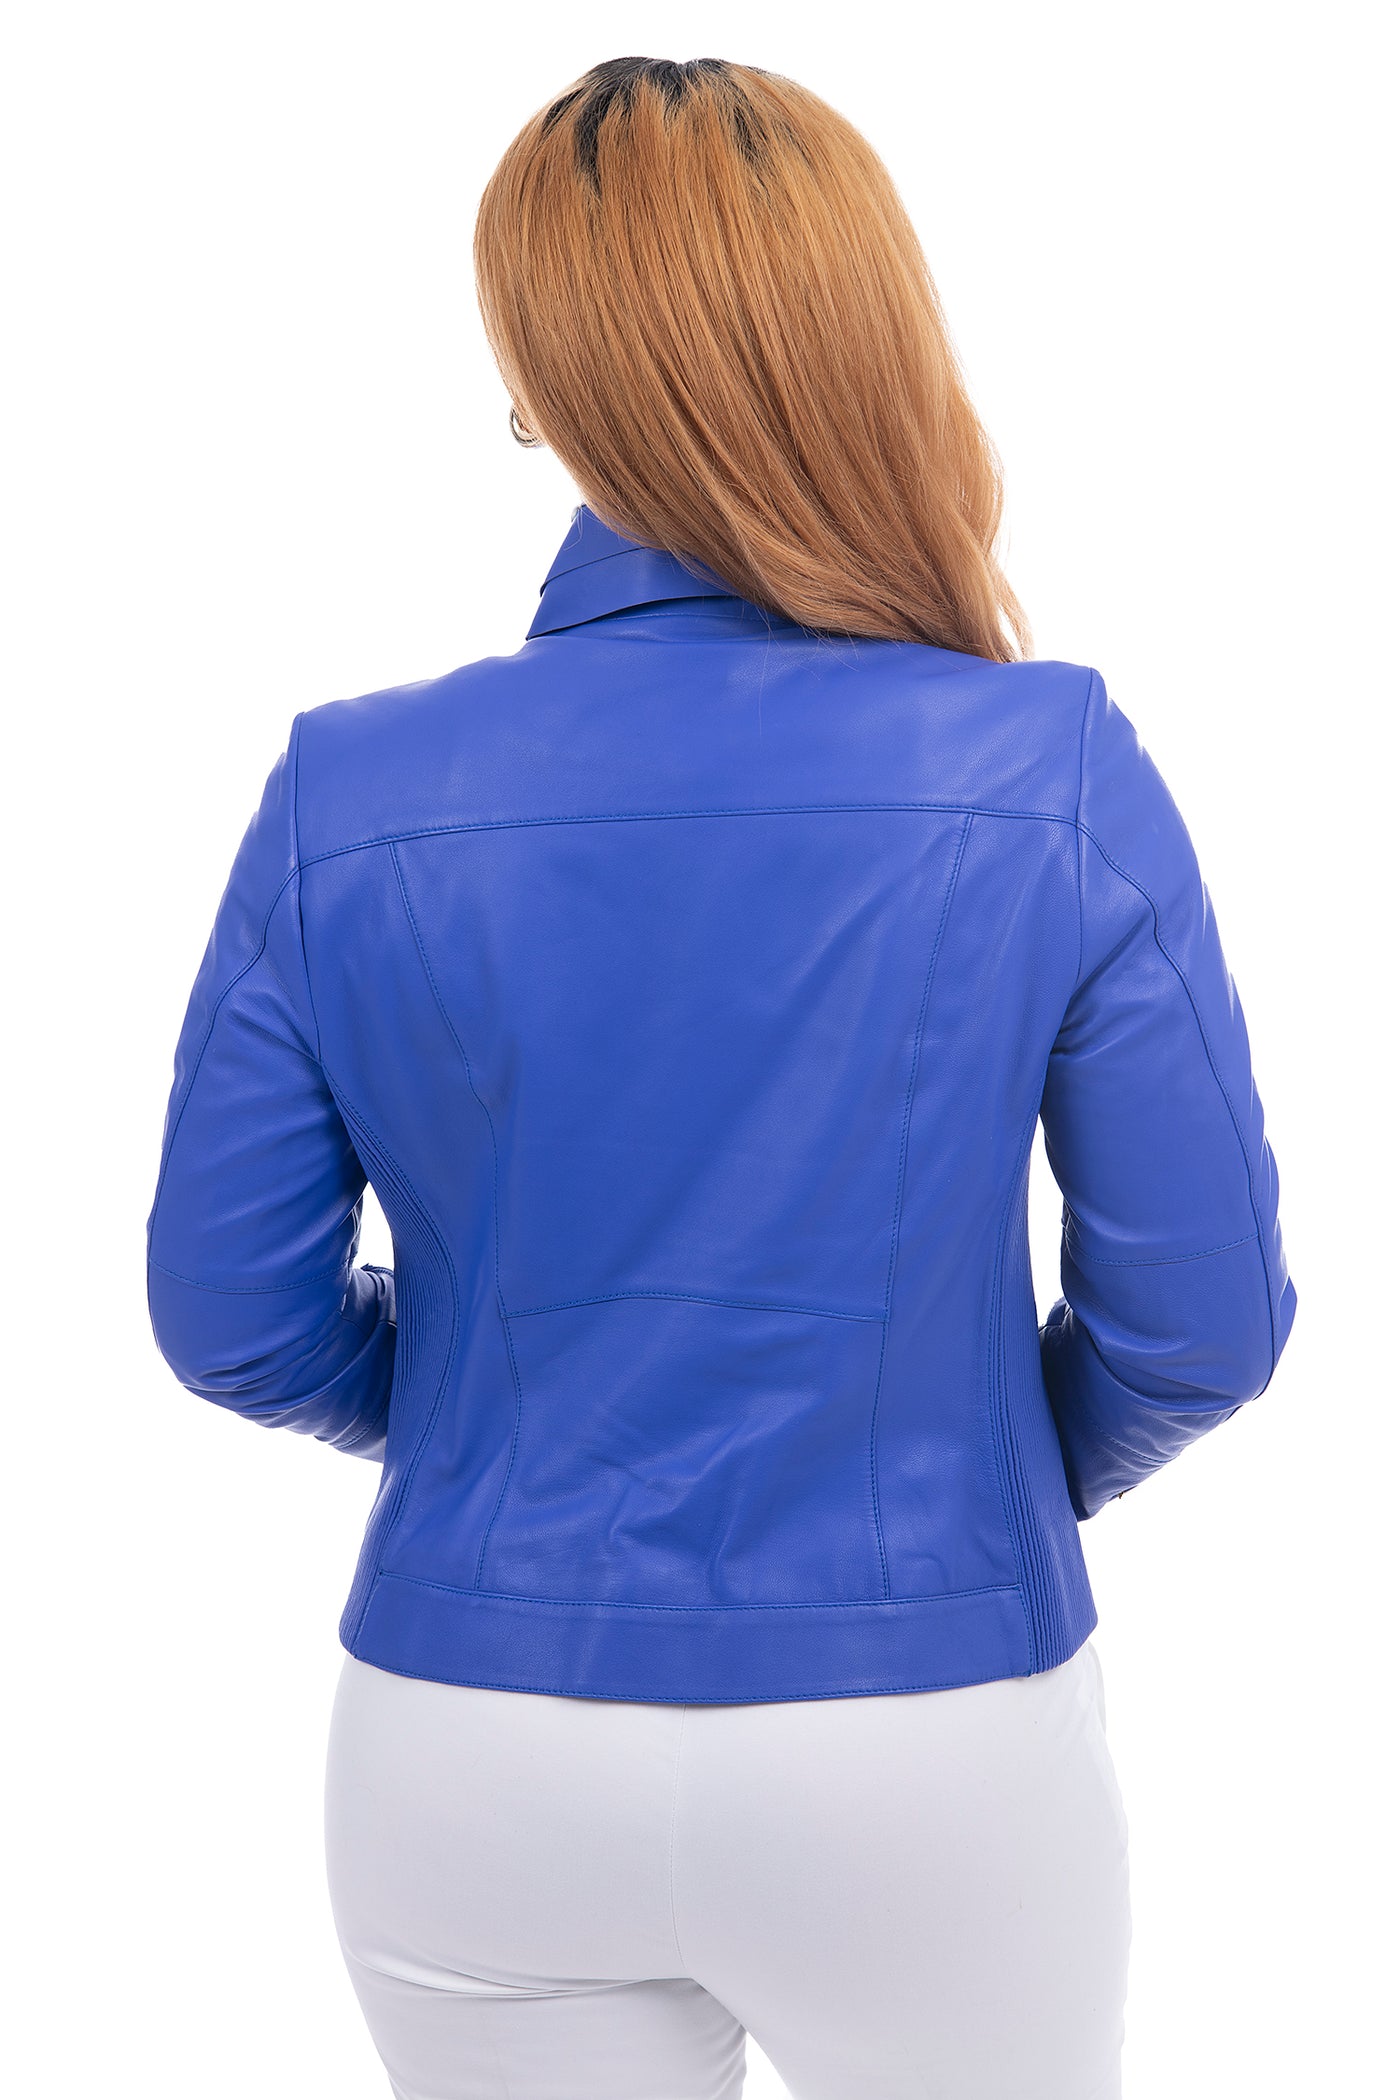 Escada Vintage, blue leather jacket